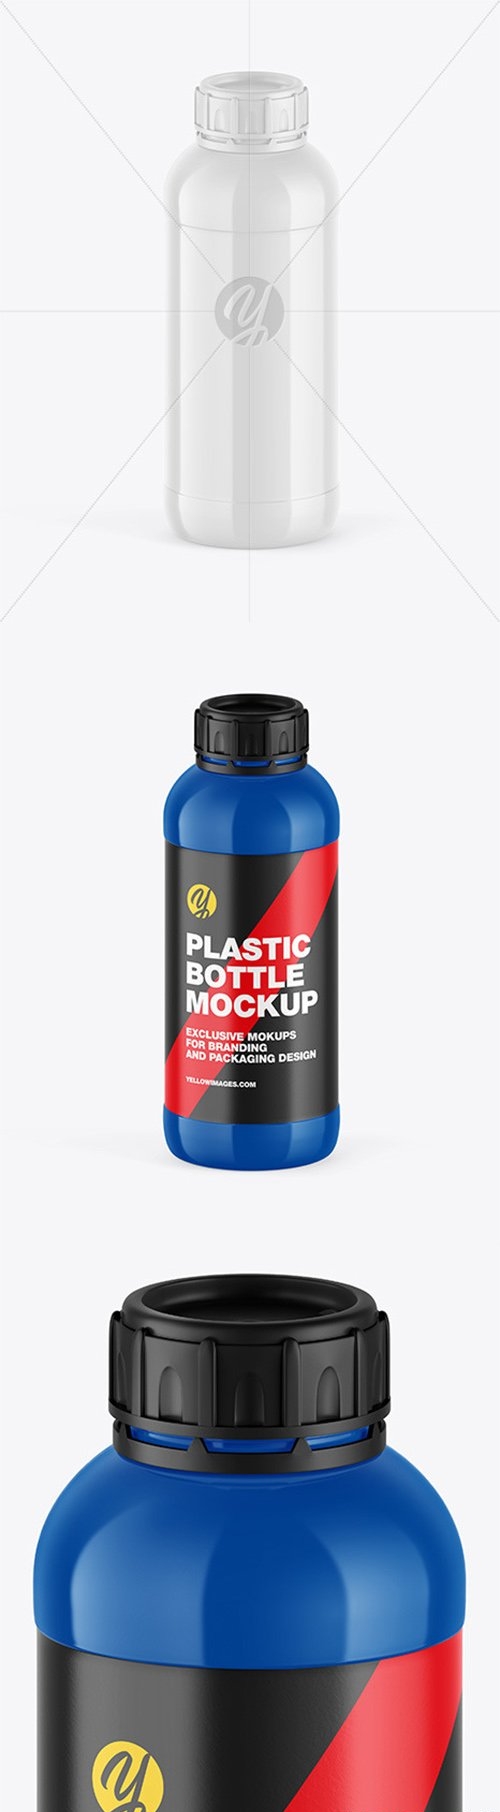 Glossy Plastic Bottle Mockup 66466